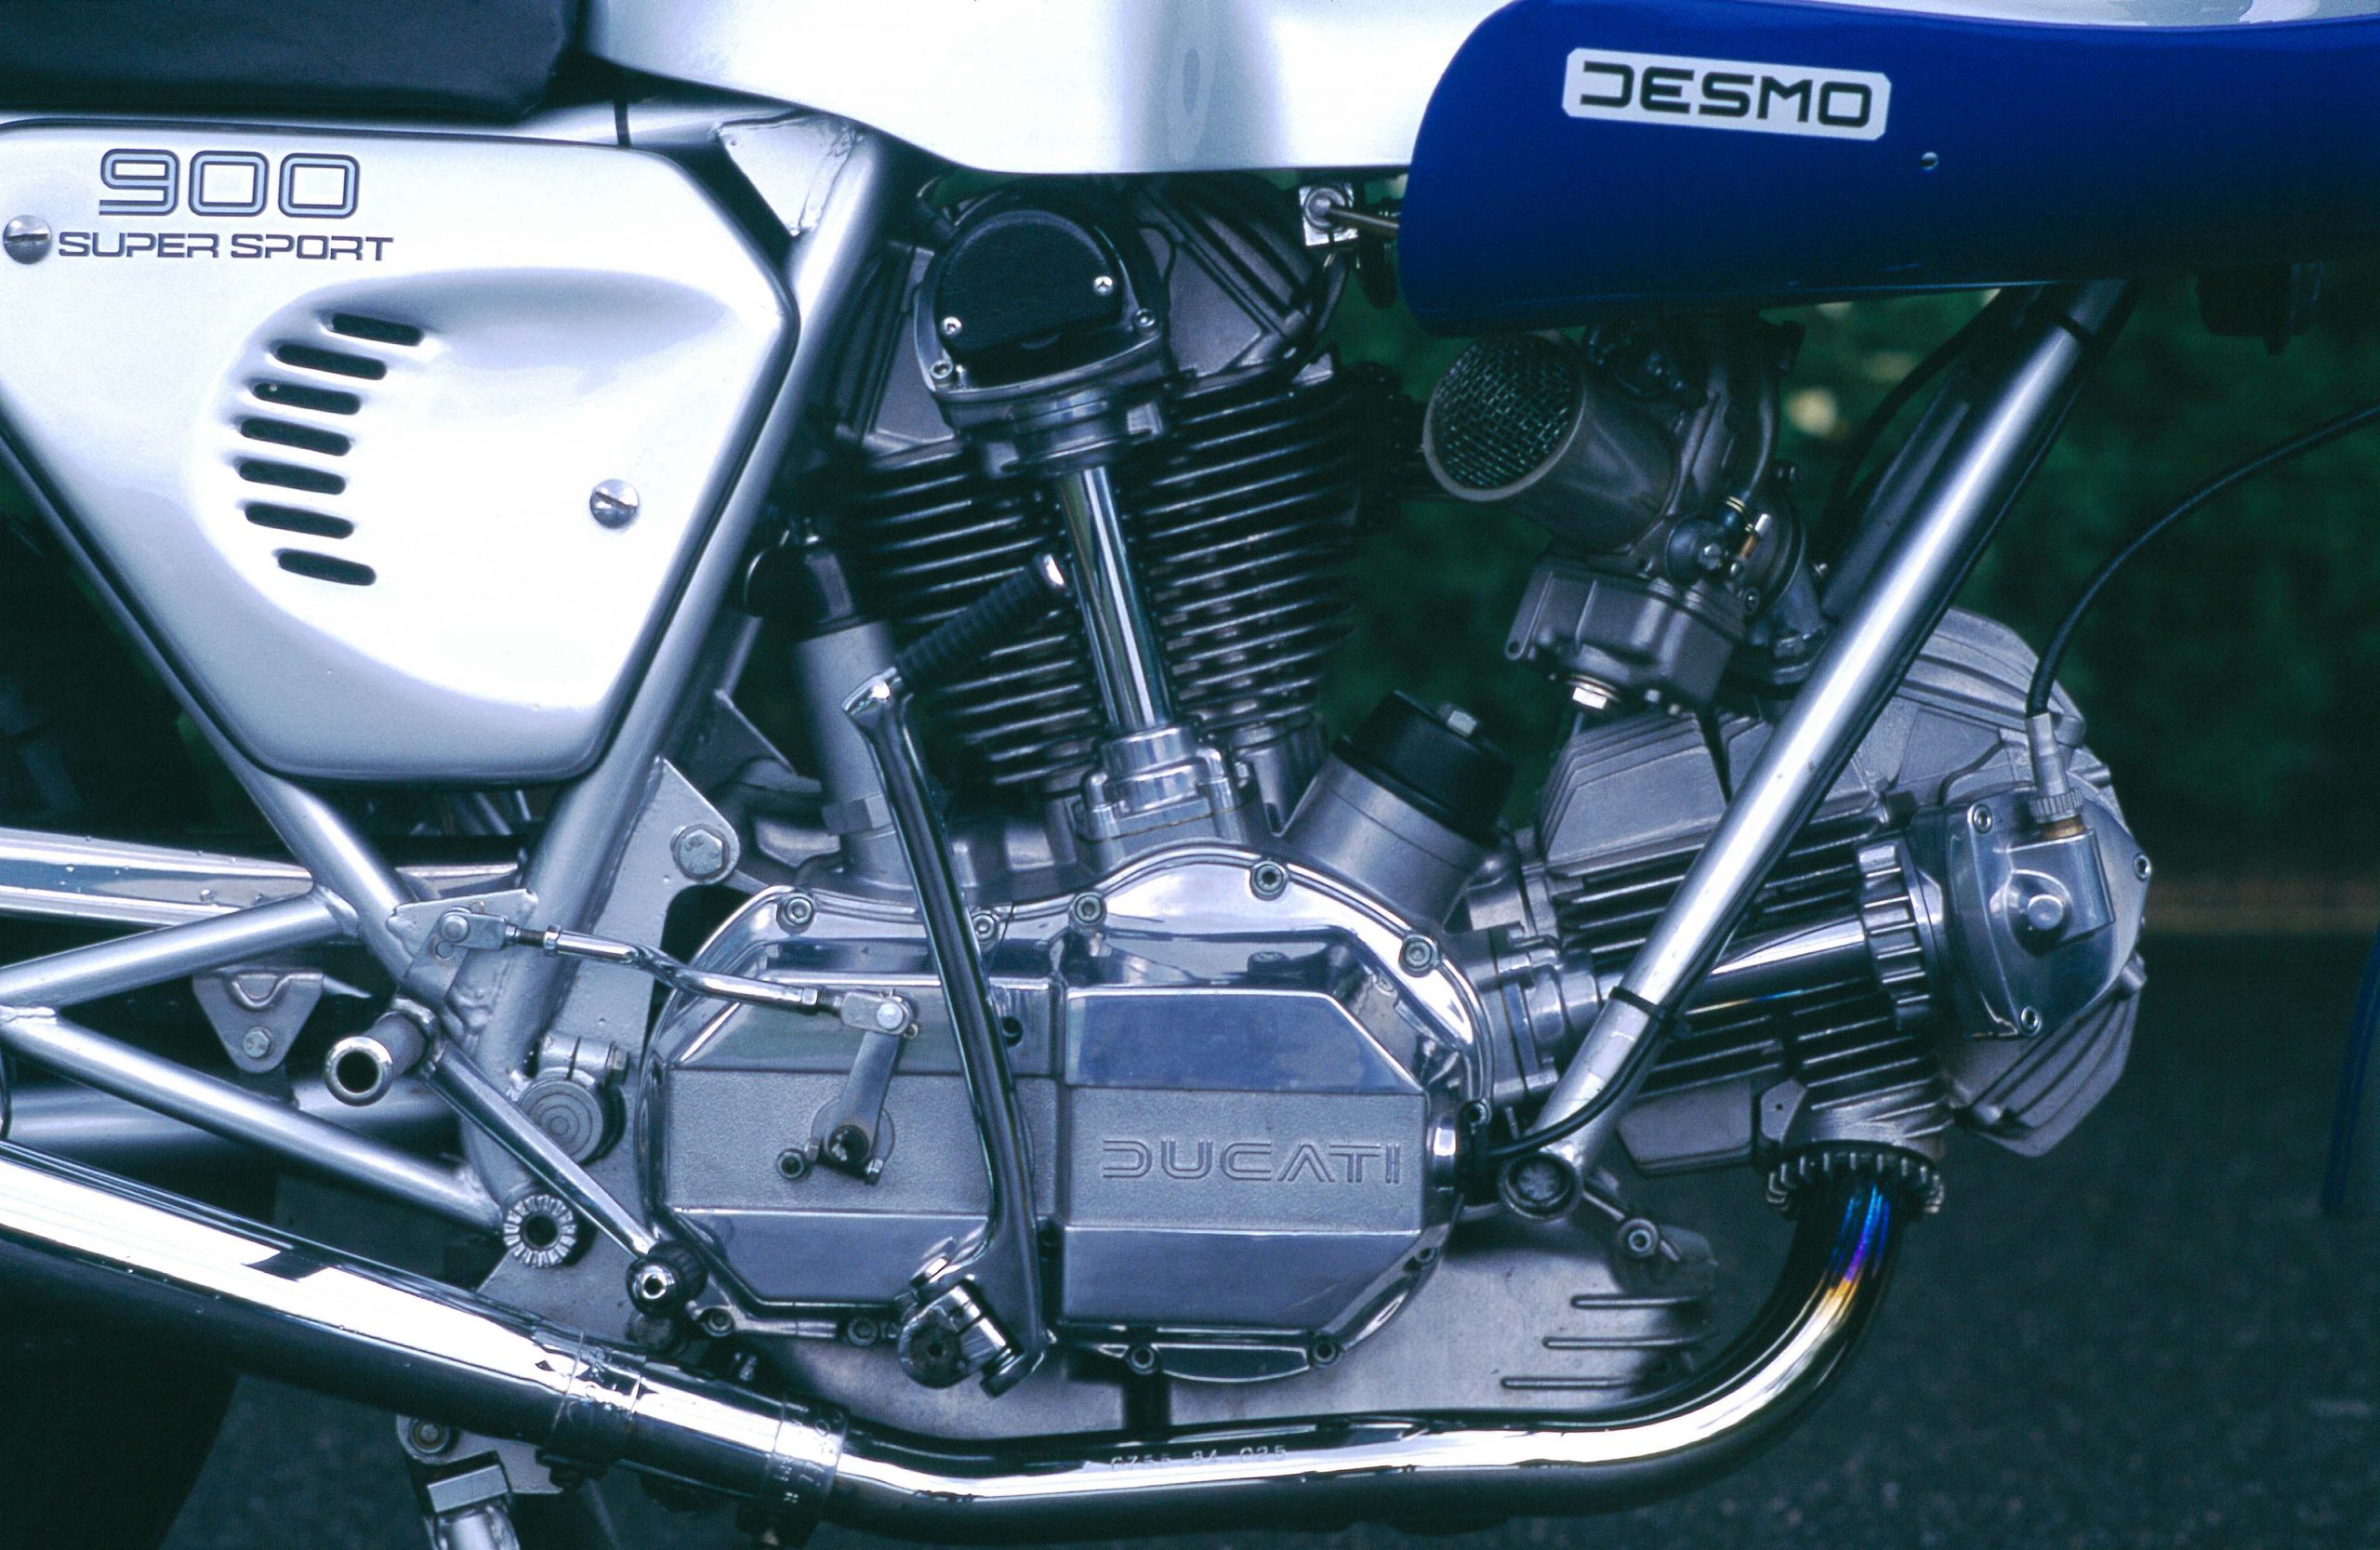 Ducati 900 Super Sport engine